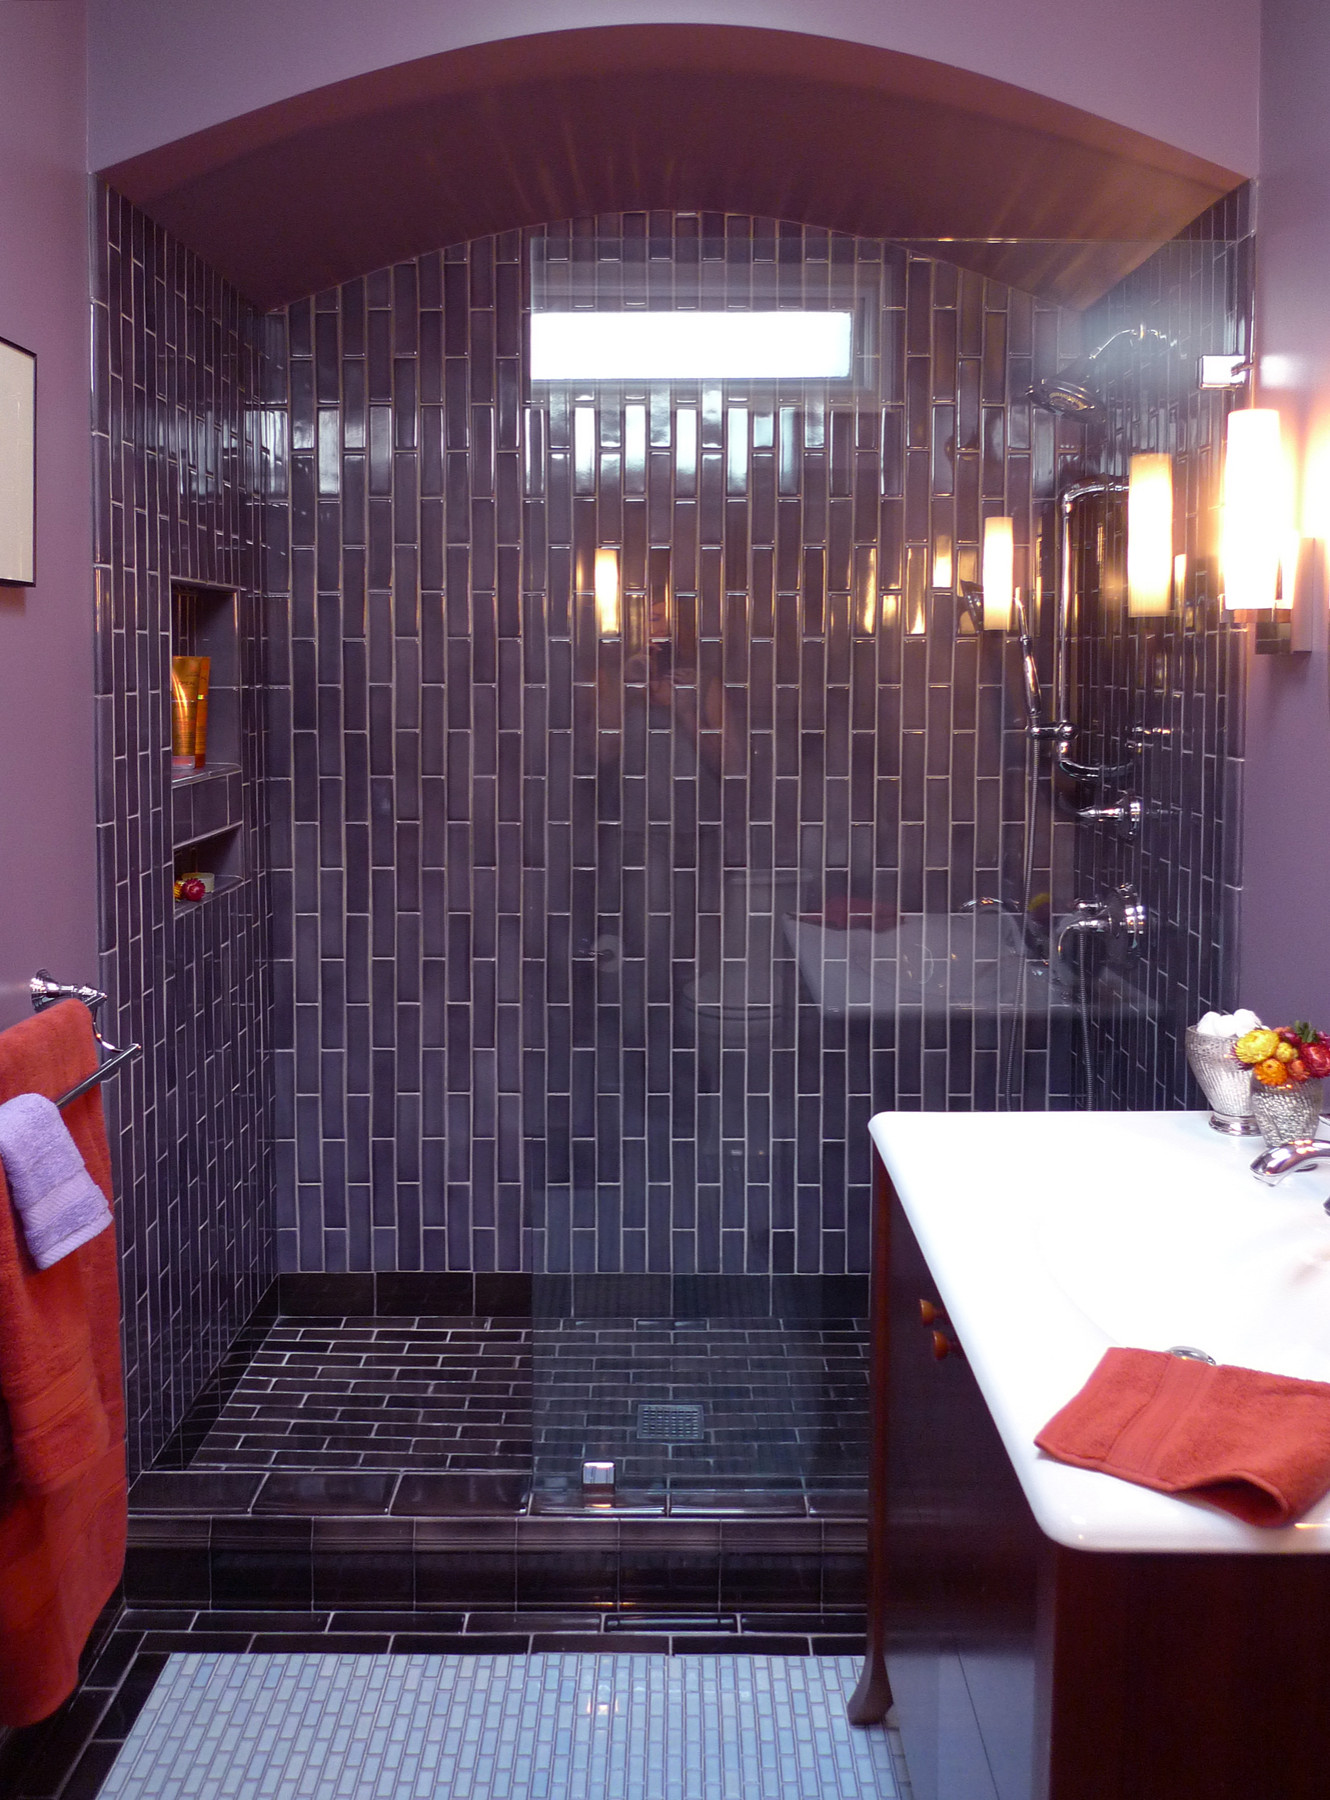 75 Beautiful Purple Bathroom Pictures Ideas December 2020 Houzz